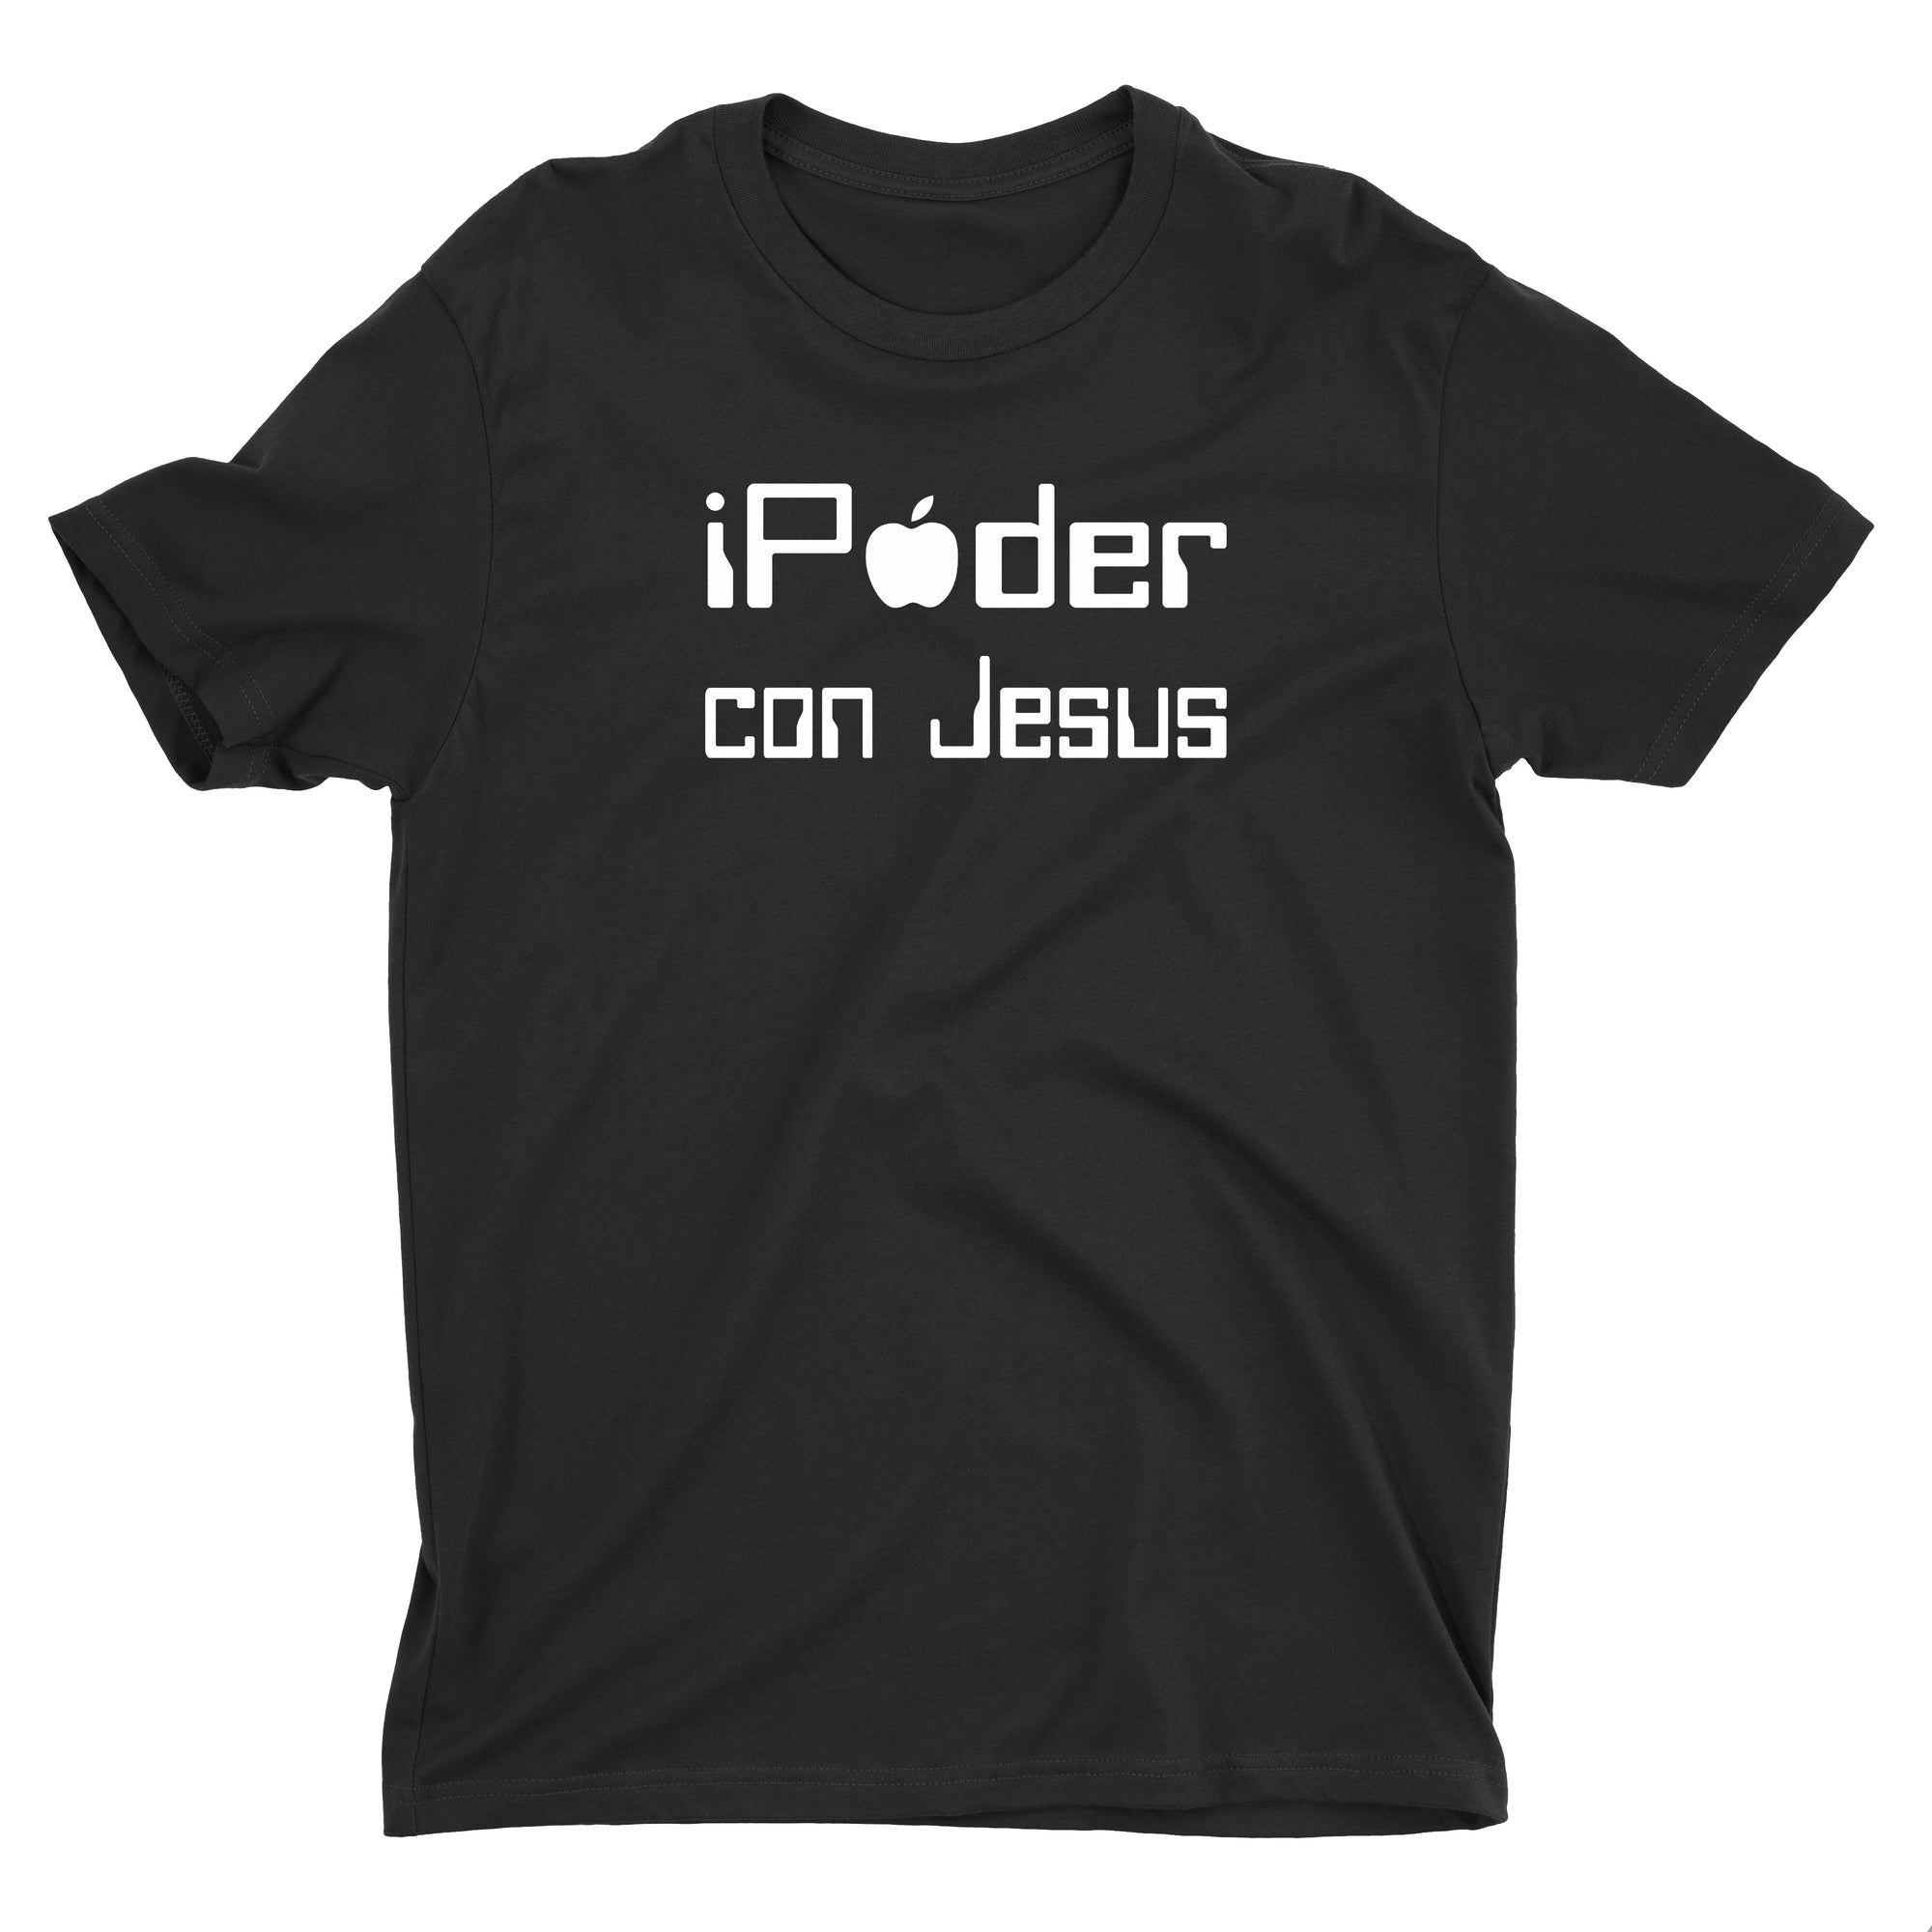 iPoder Con Jesus Camiseta Cristiana Para Hombres en Negro | Aprojes